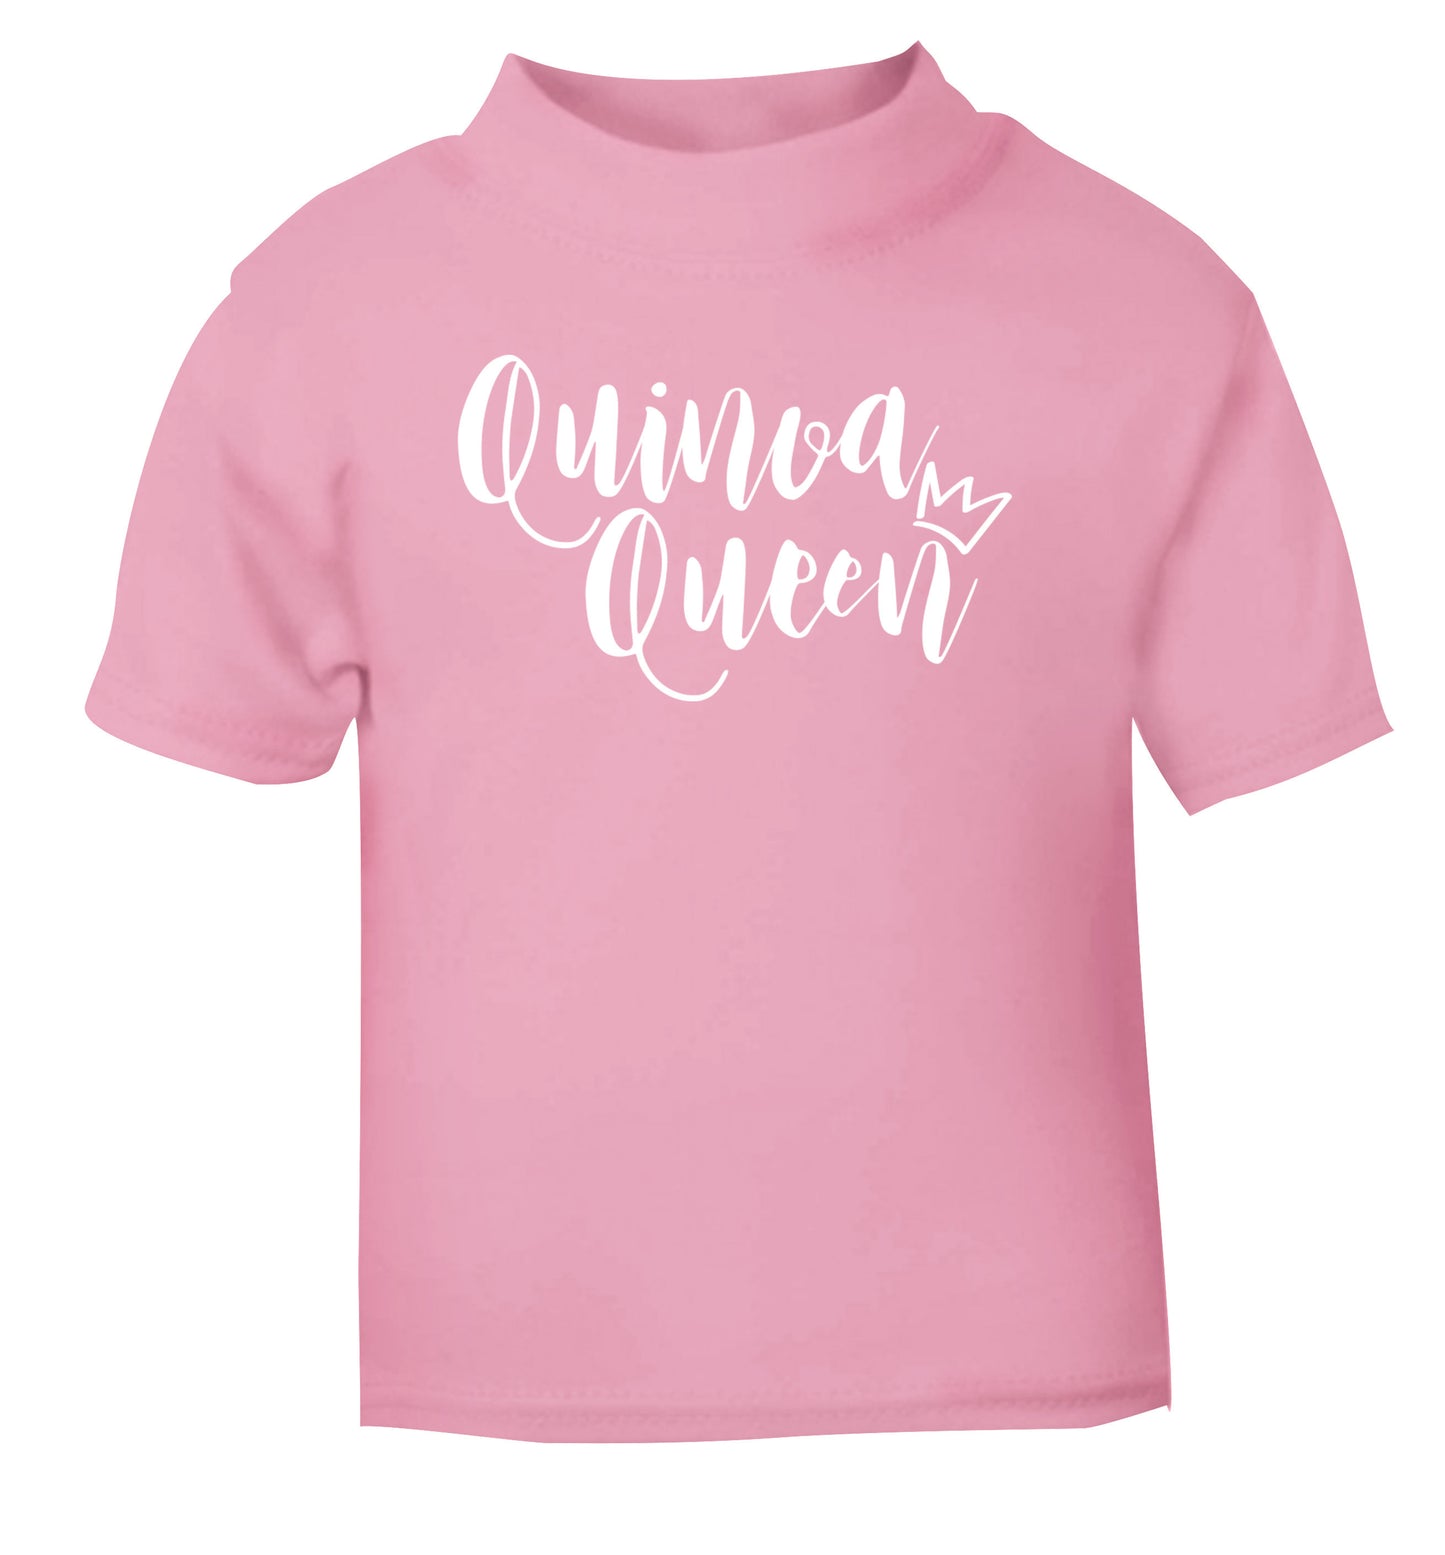 Quinoa Queen light pink Baby Toddler Tshirt 2 Years